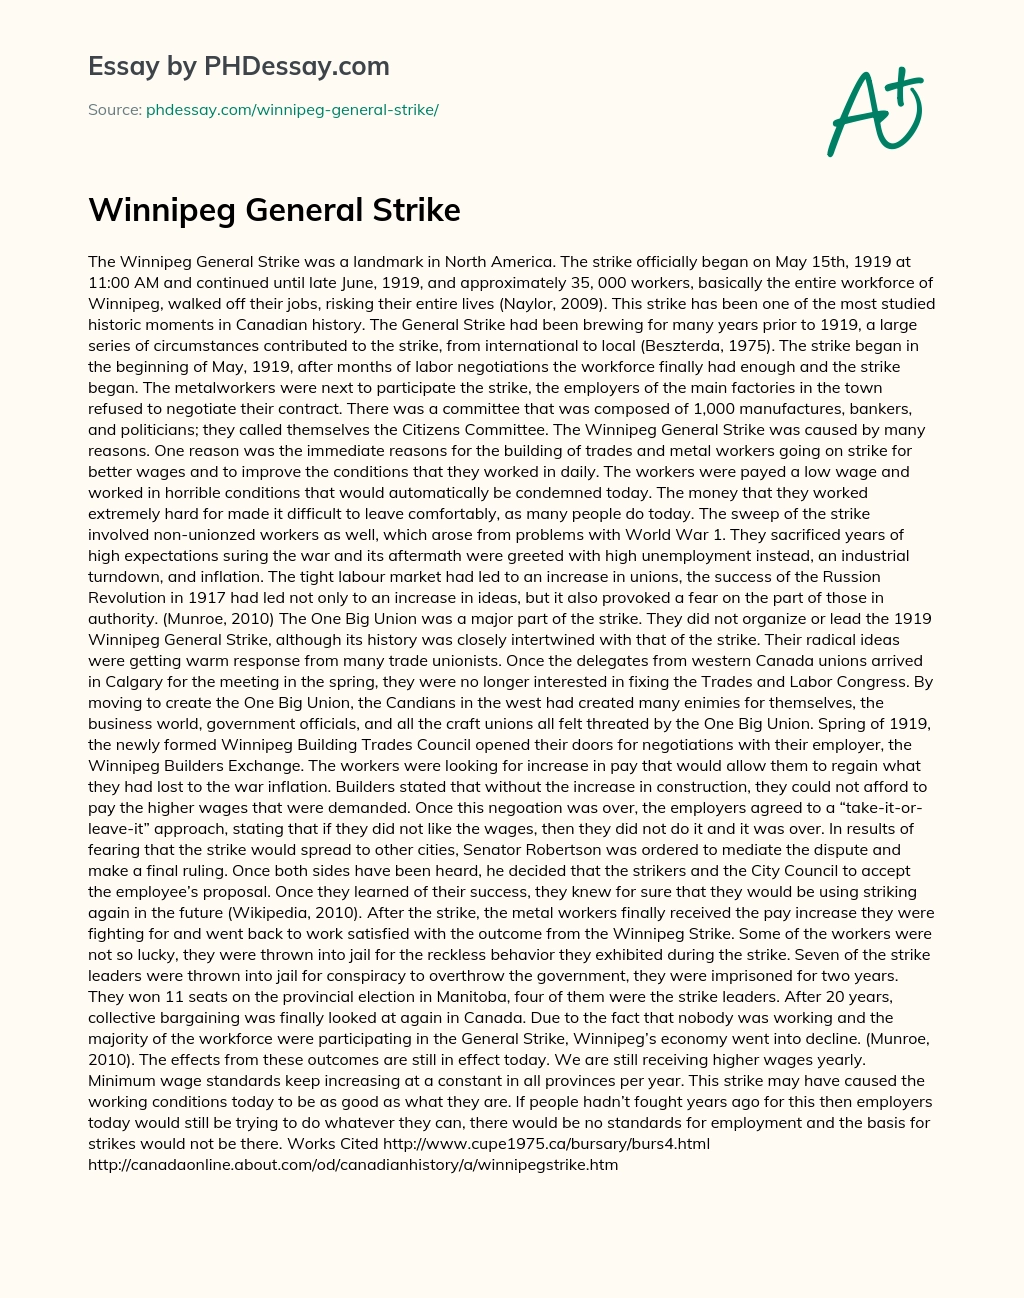 Winnipeg General Strike essay